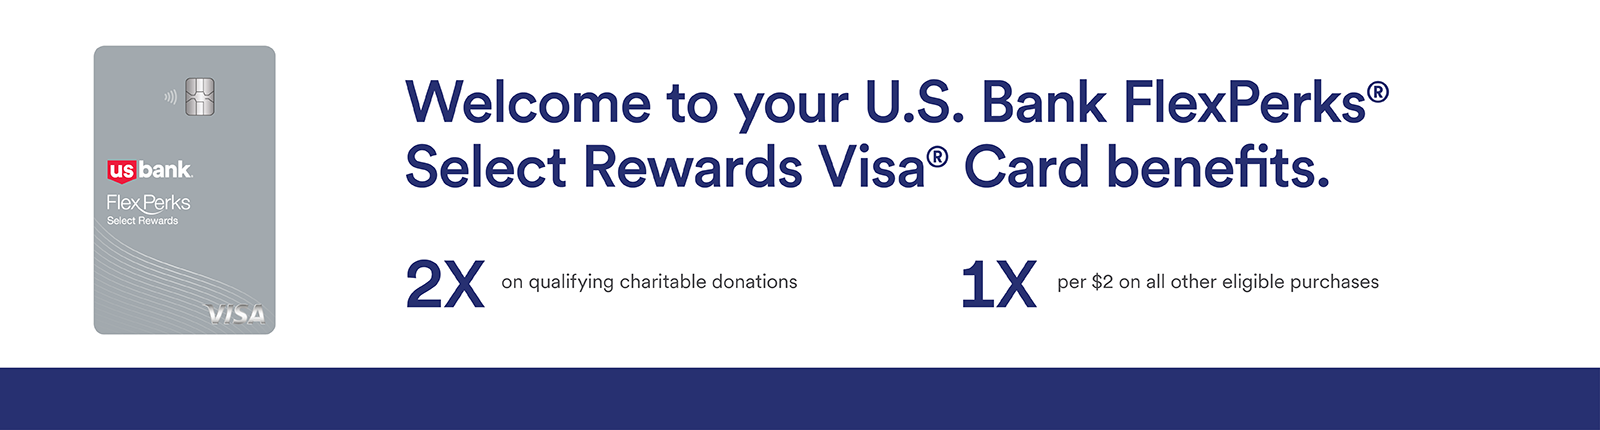 U.S. Bank FlexPerks® Select Rewards Visa® Card